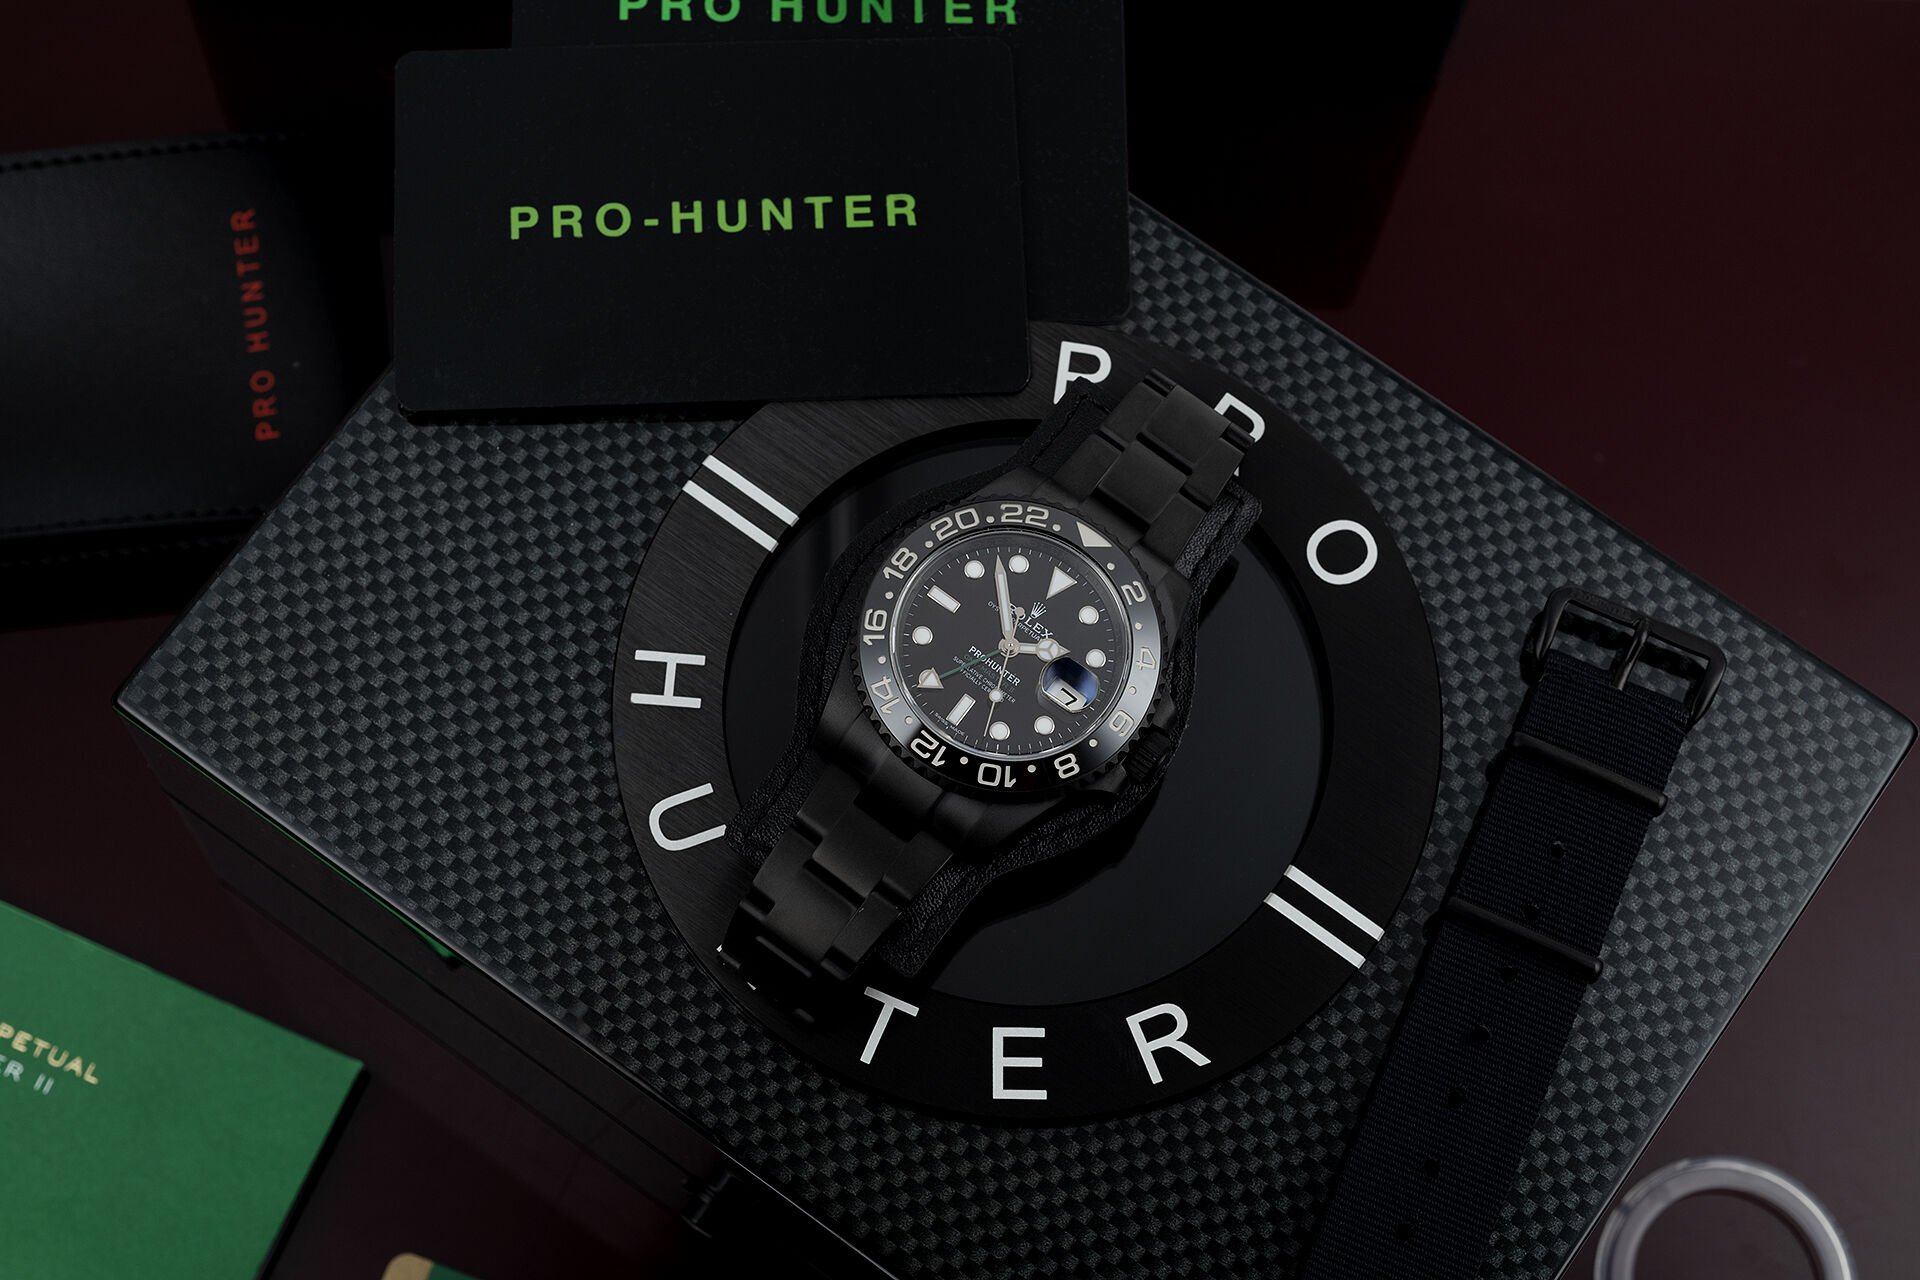 ref 116710LN | One of 100 | Pro Hunter GMT-Master II